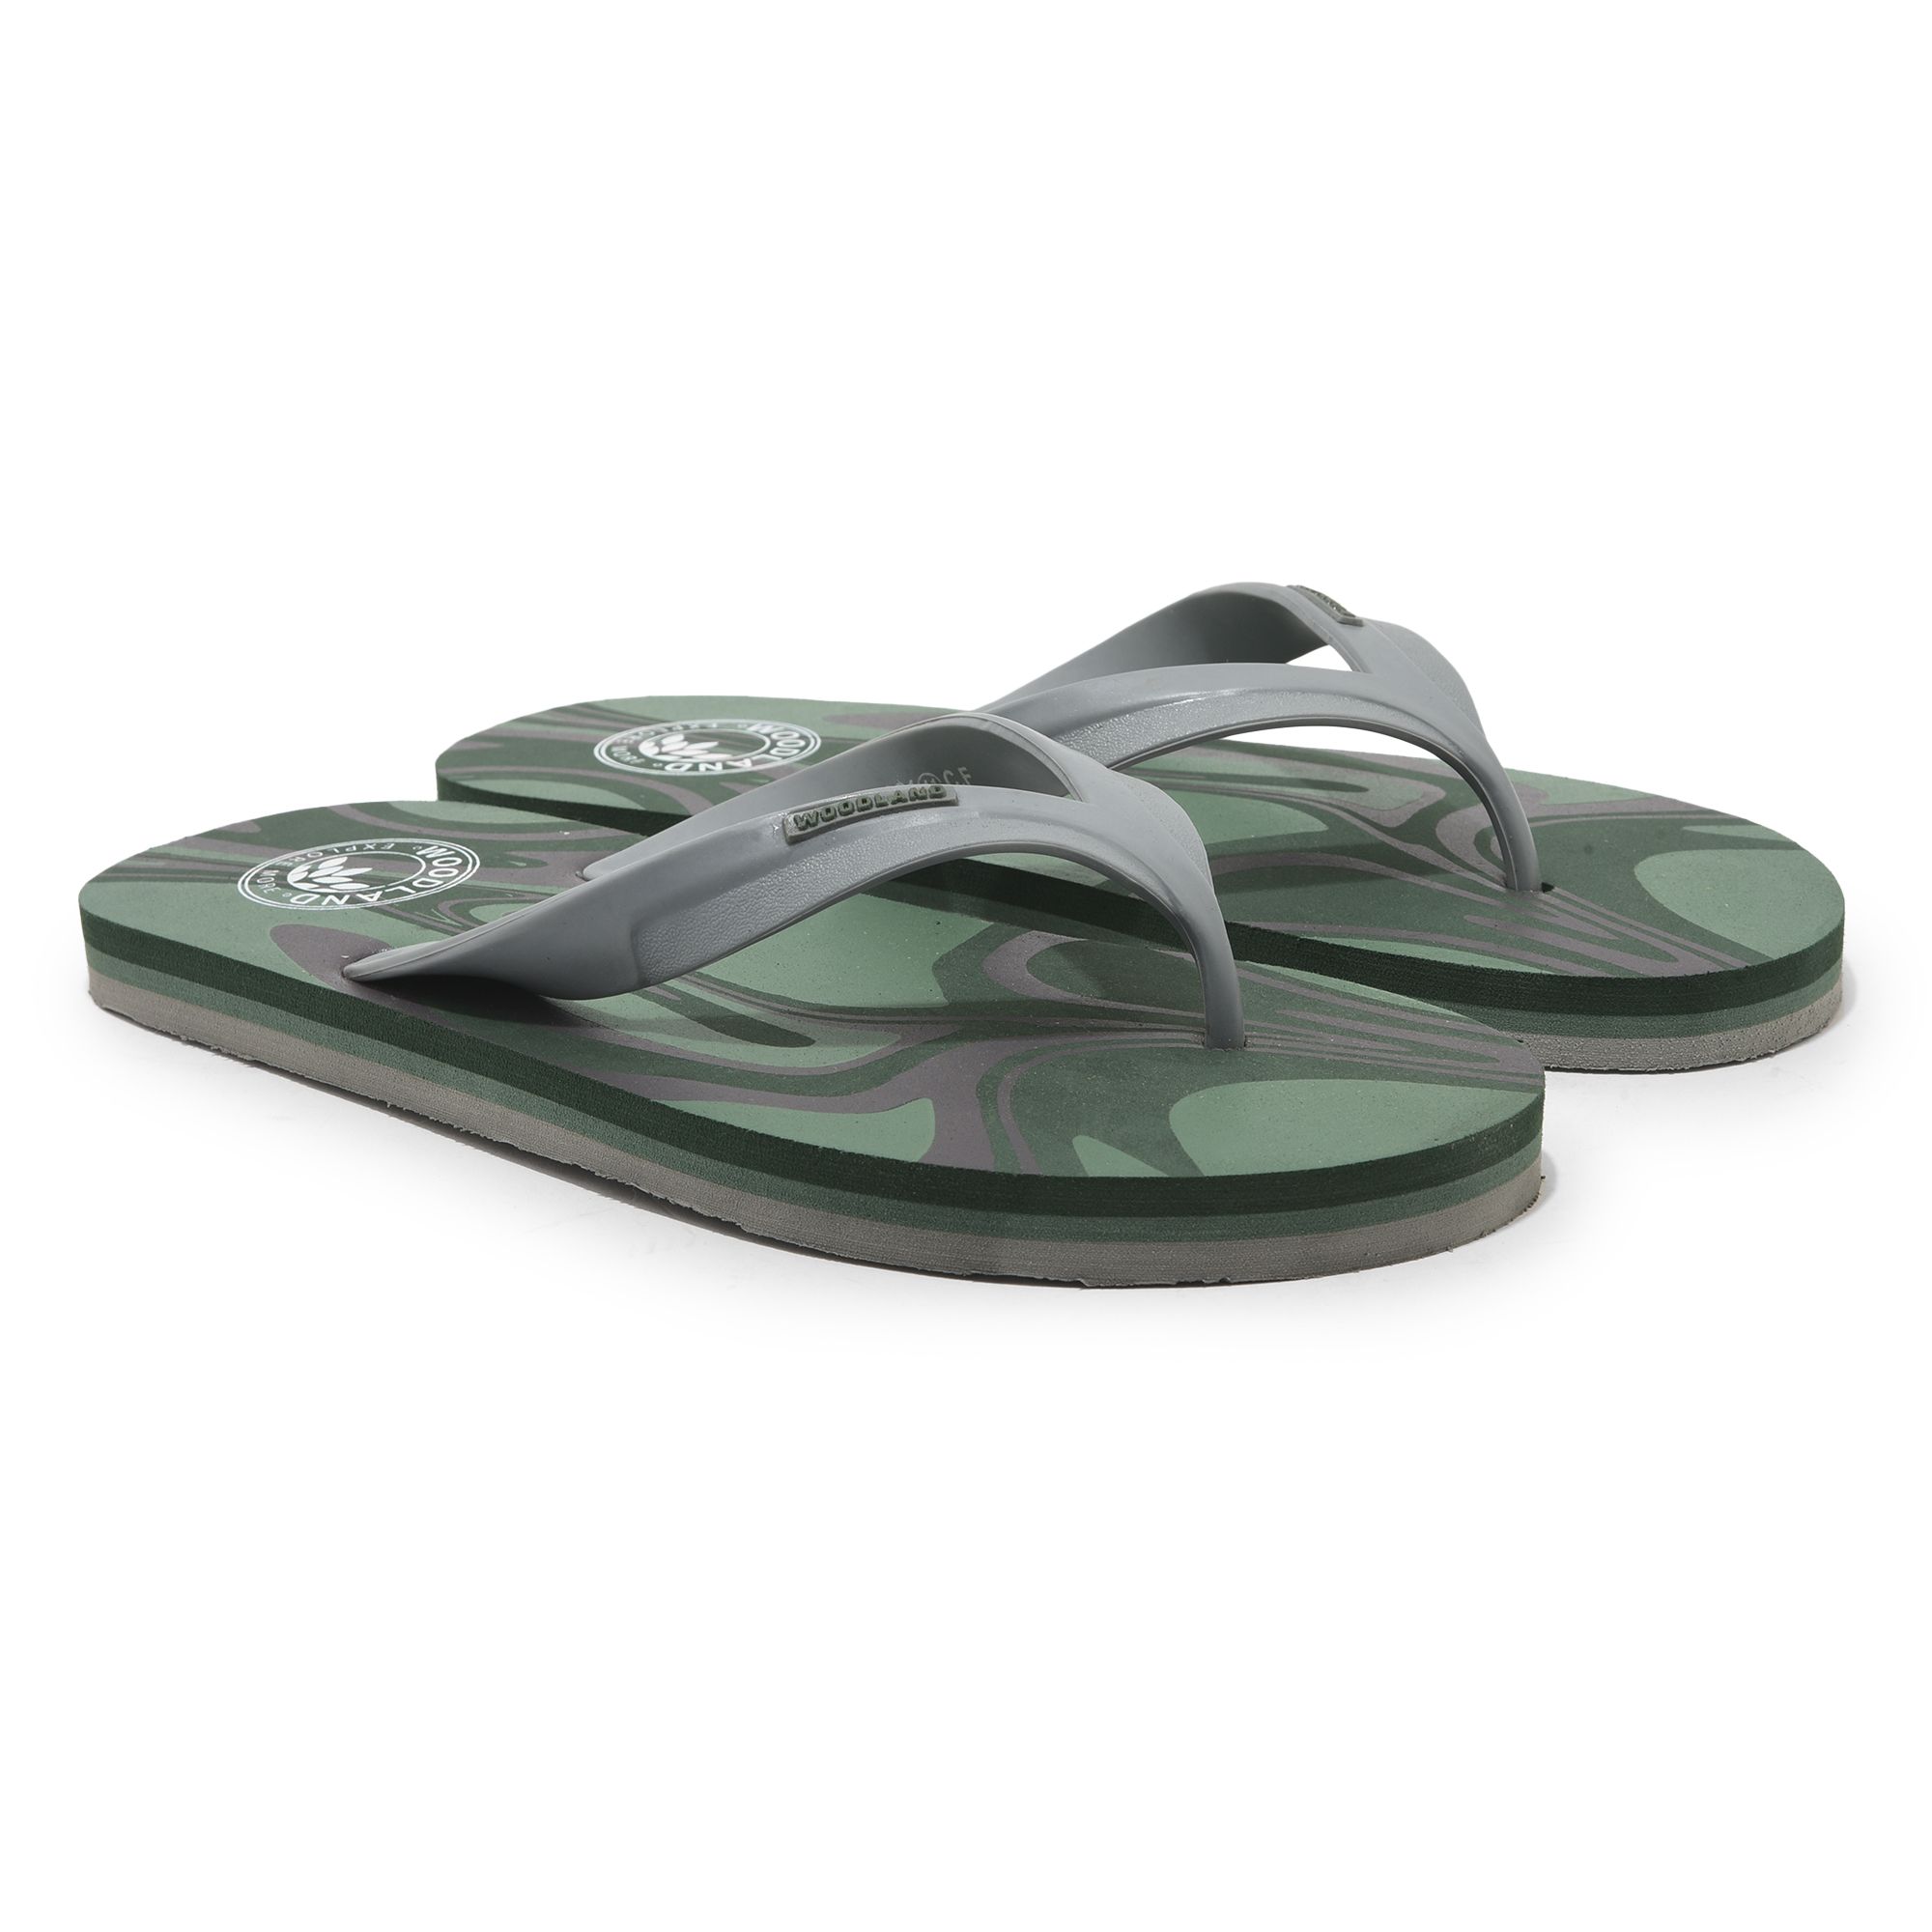 Olive Slide sandal for men